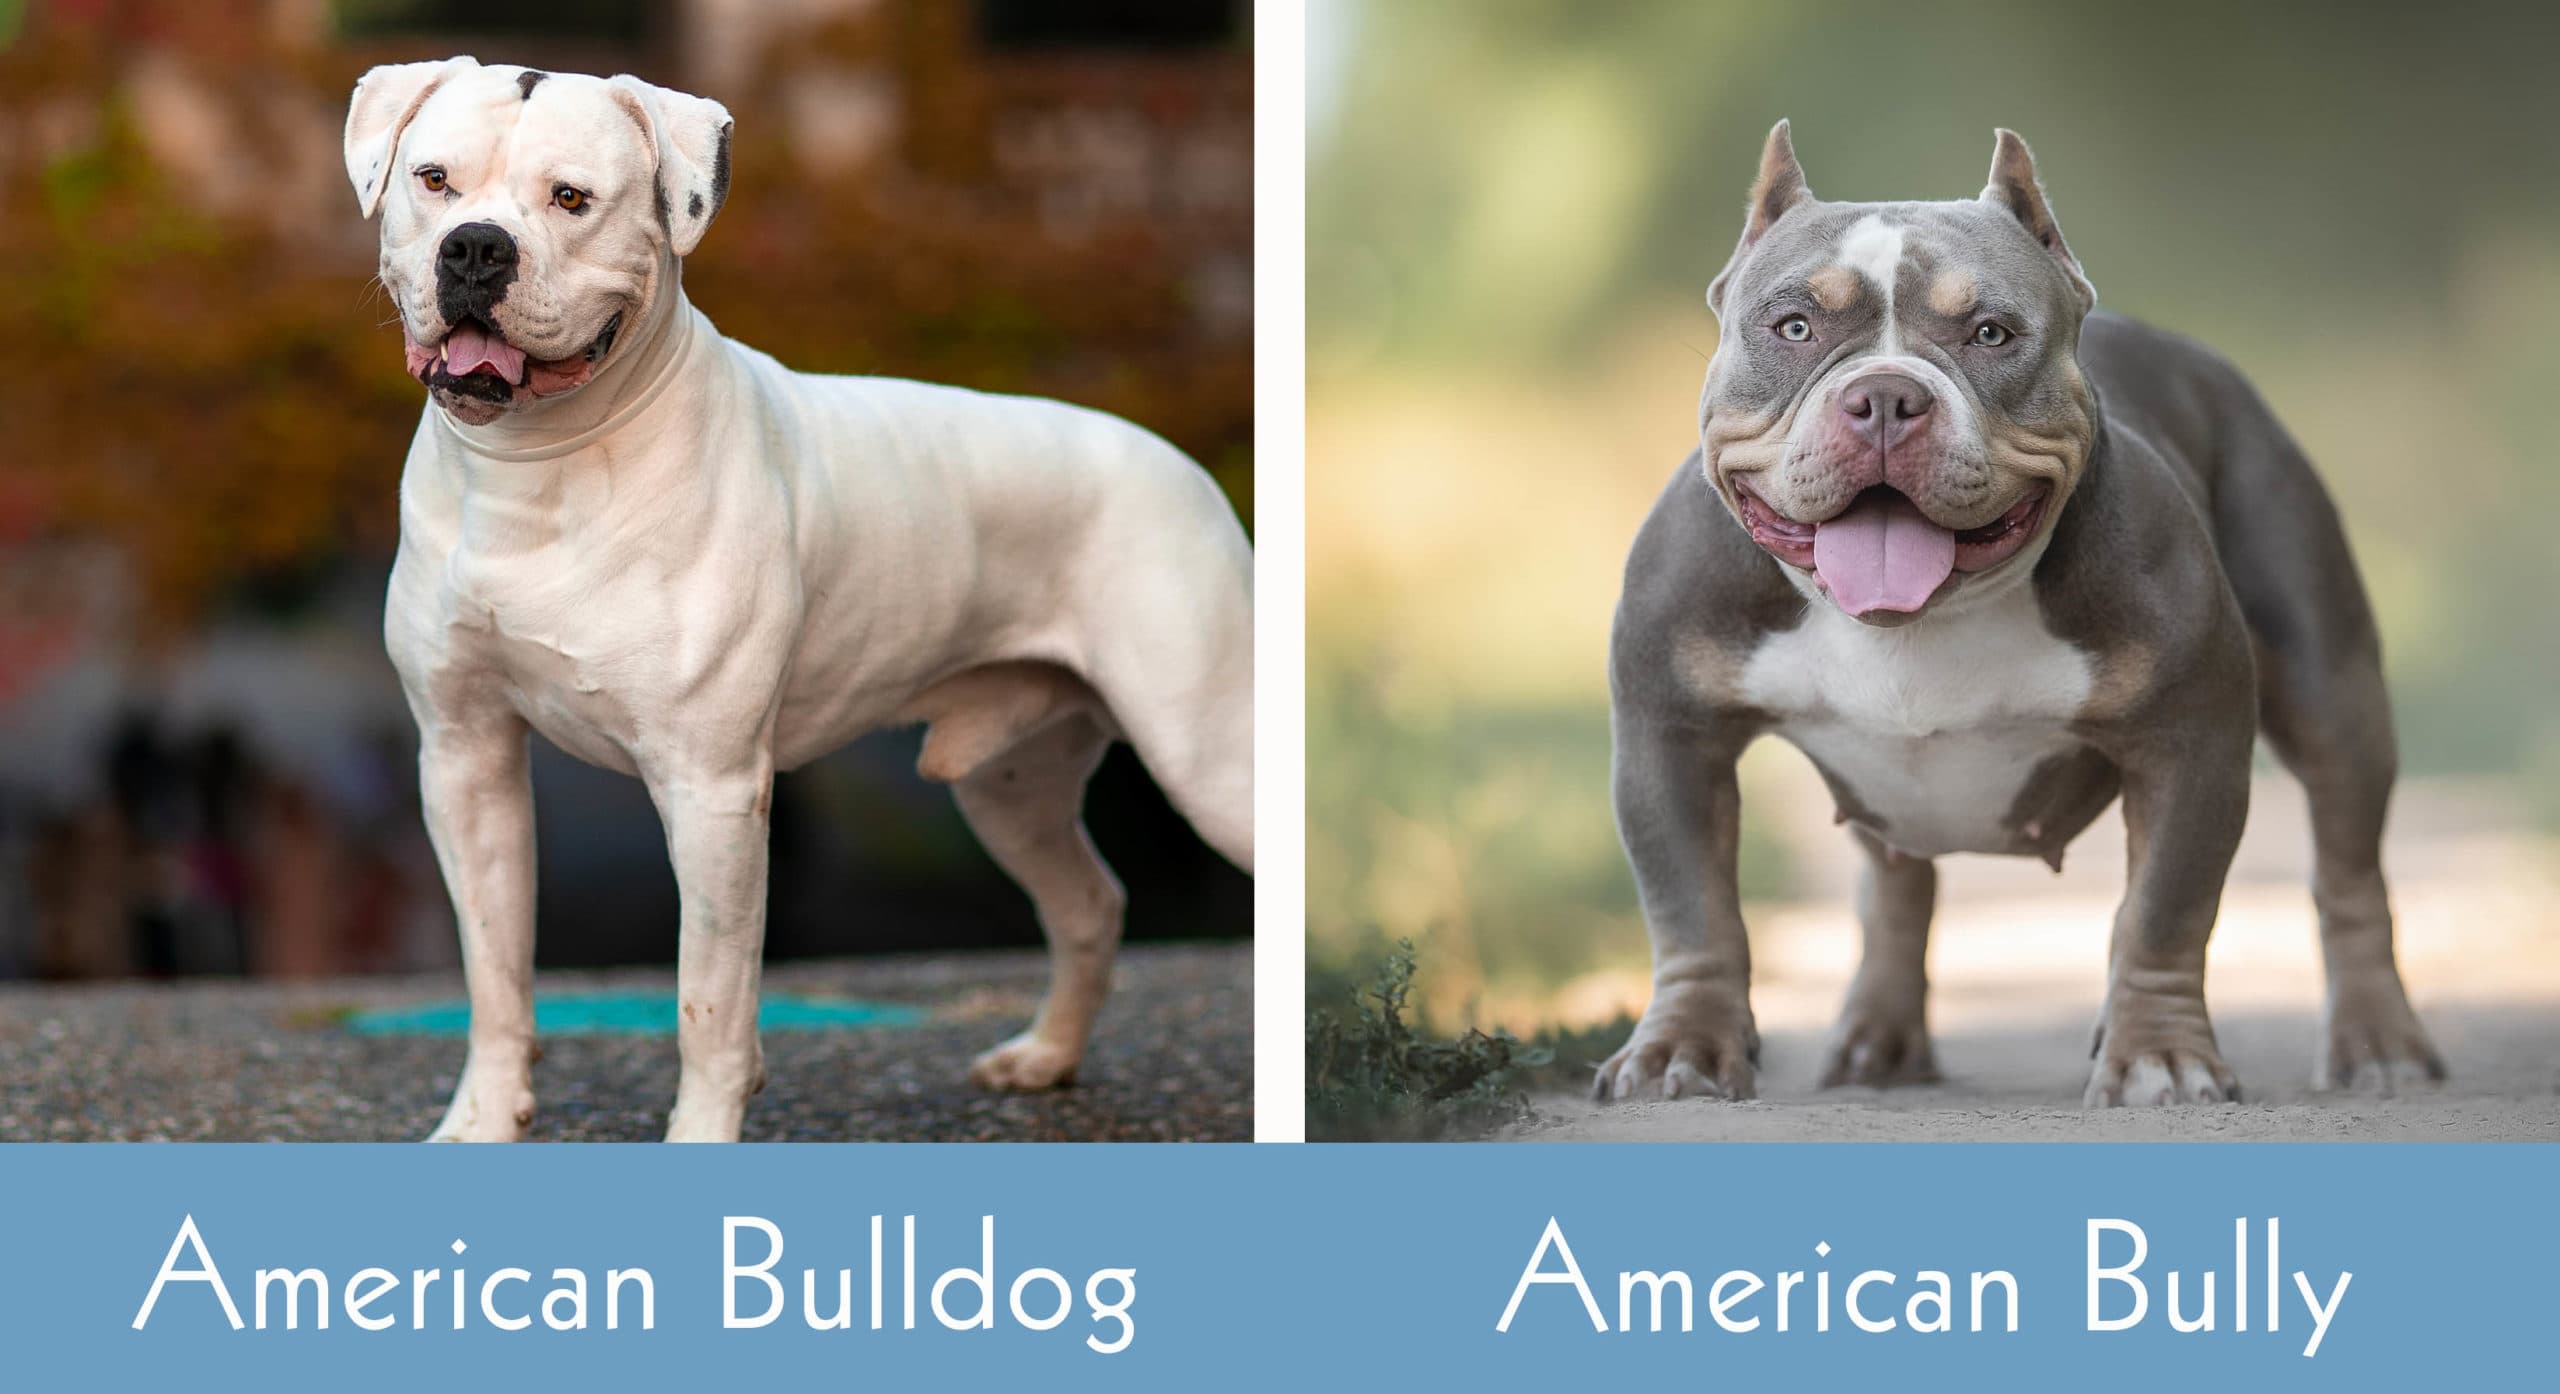 American Bully Or American Bulldog?